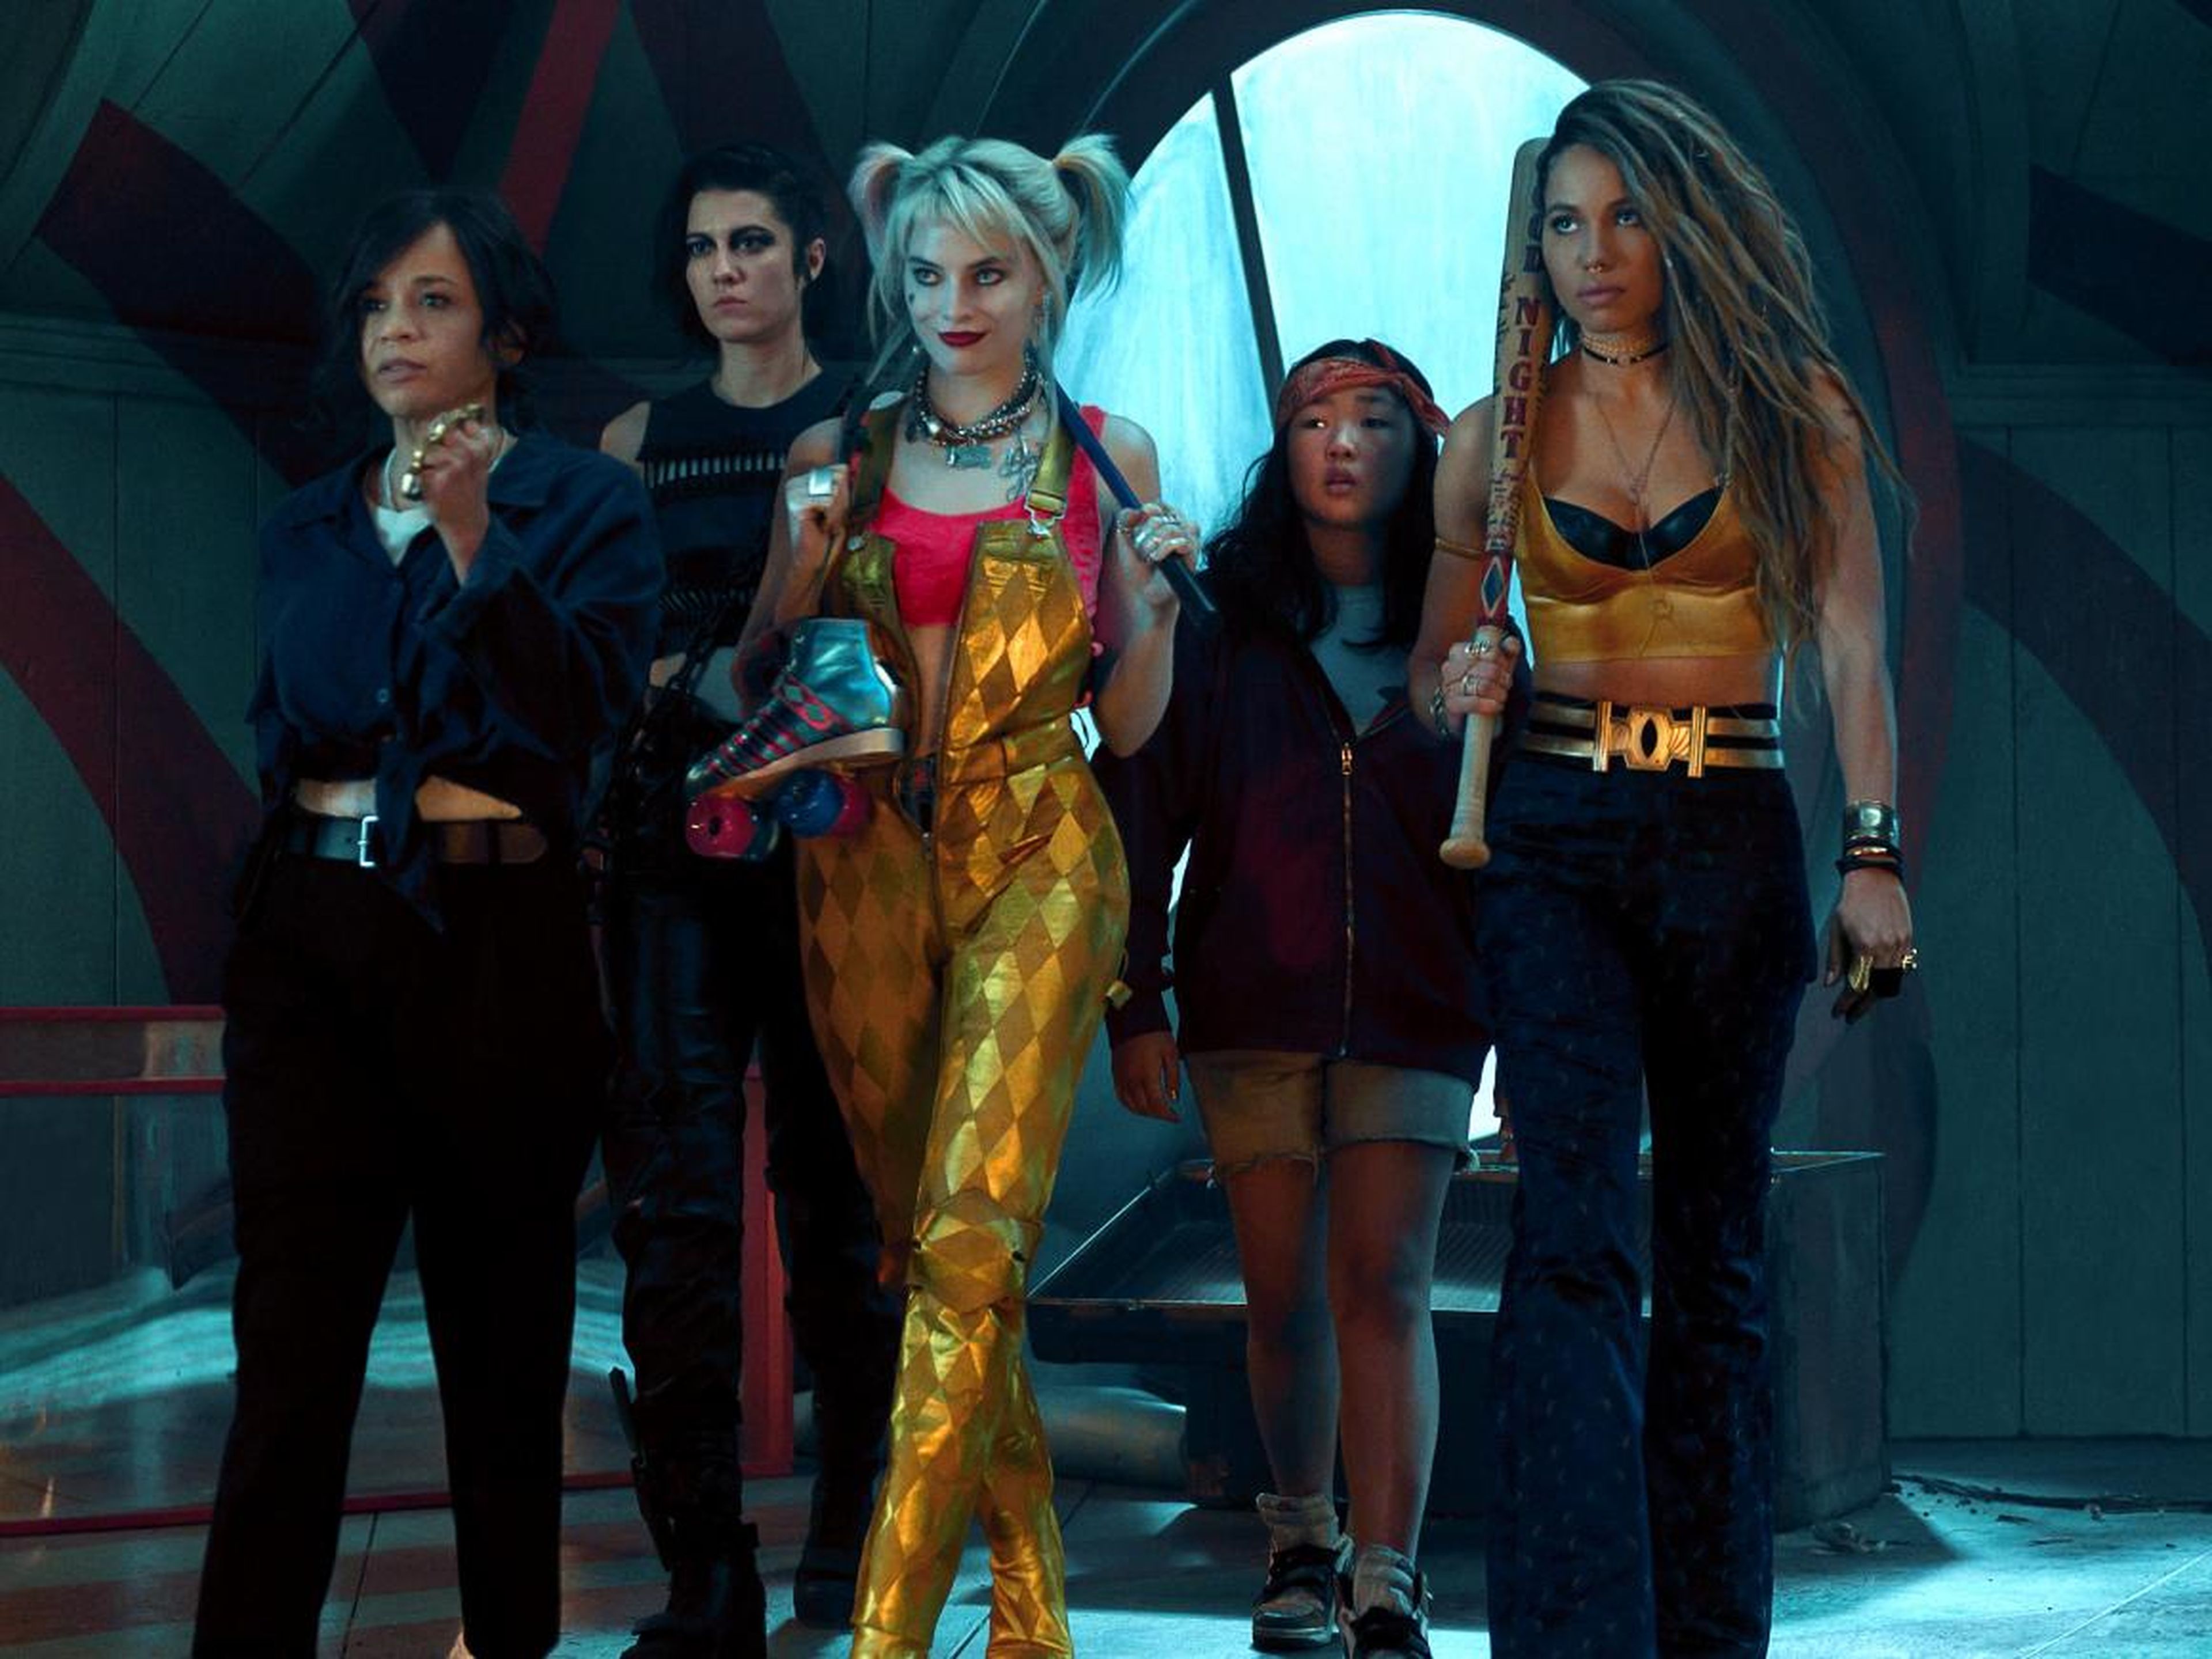 Rosie Pérez, Mary Elizabeth Winstead, Margot Robbie, Ella Jay Basco y Jurnee Smollett-Bell protagonizan "Birds of Prey".